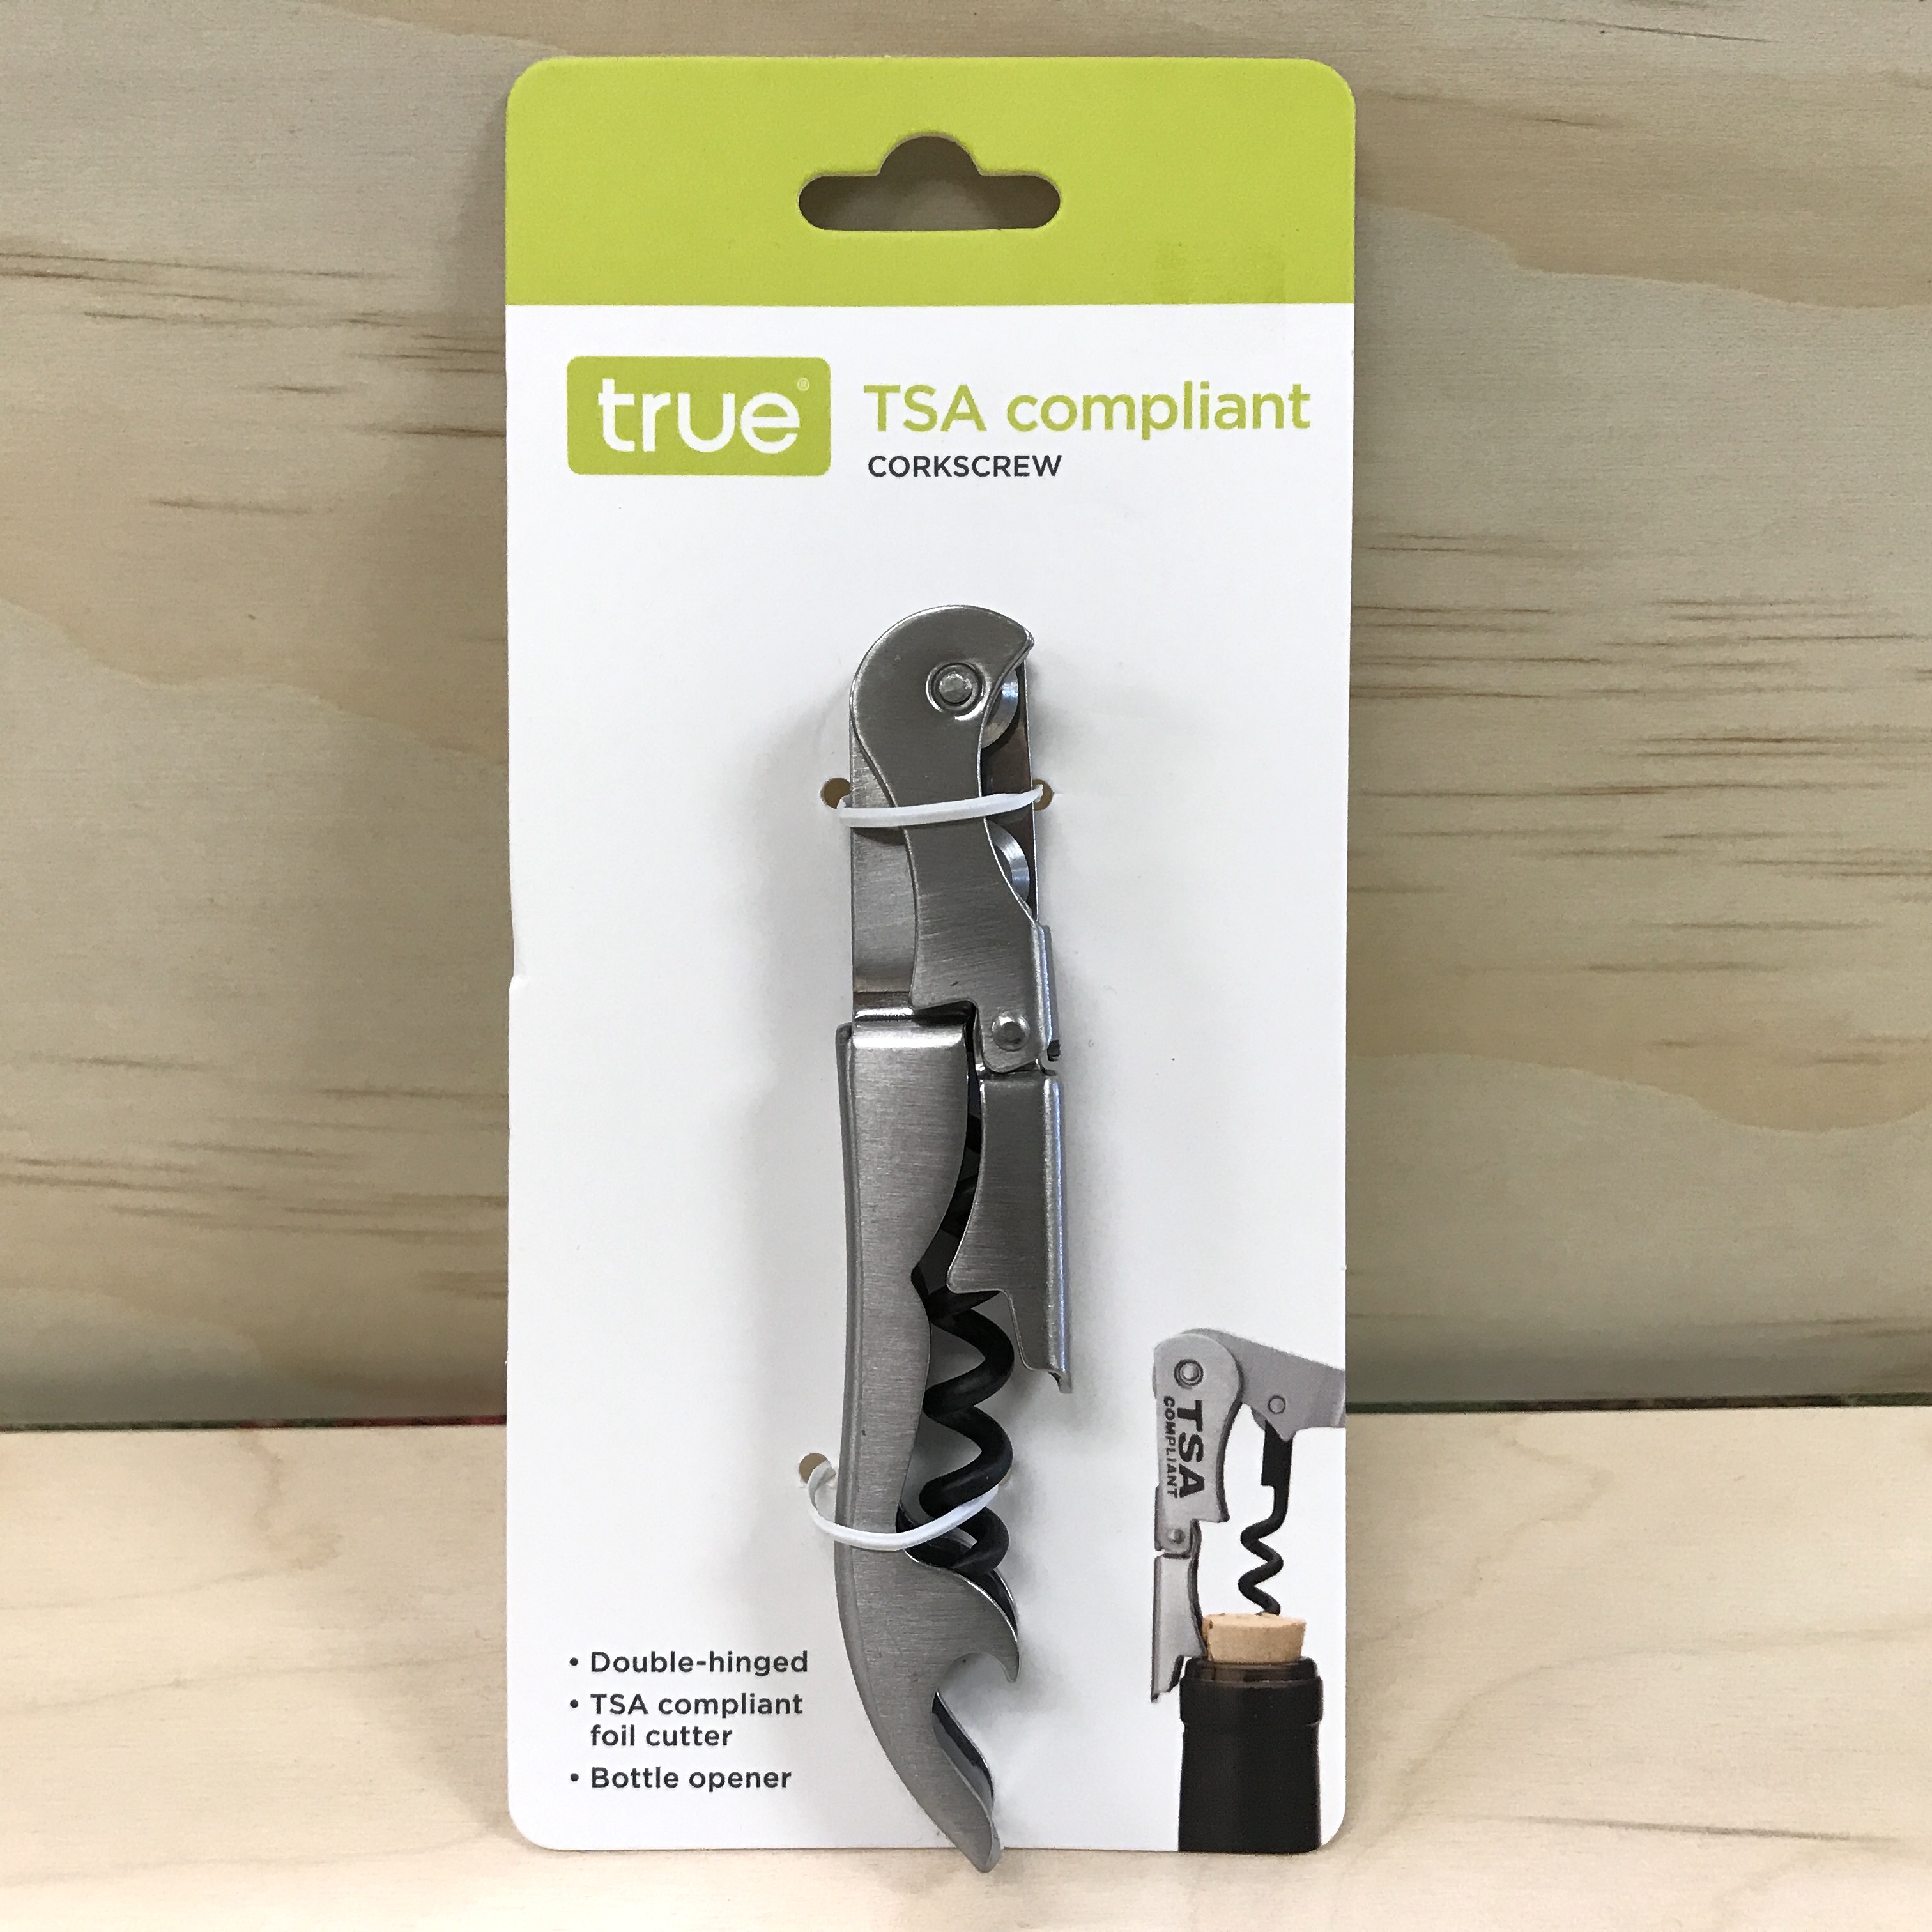 True TSA compliant Corkscrew